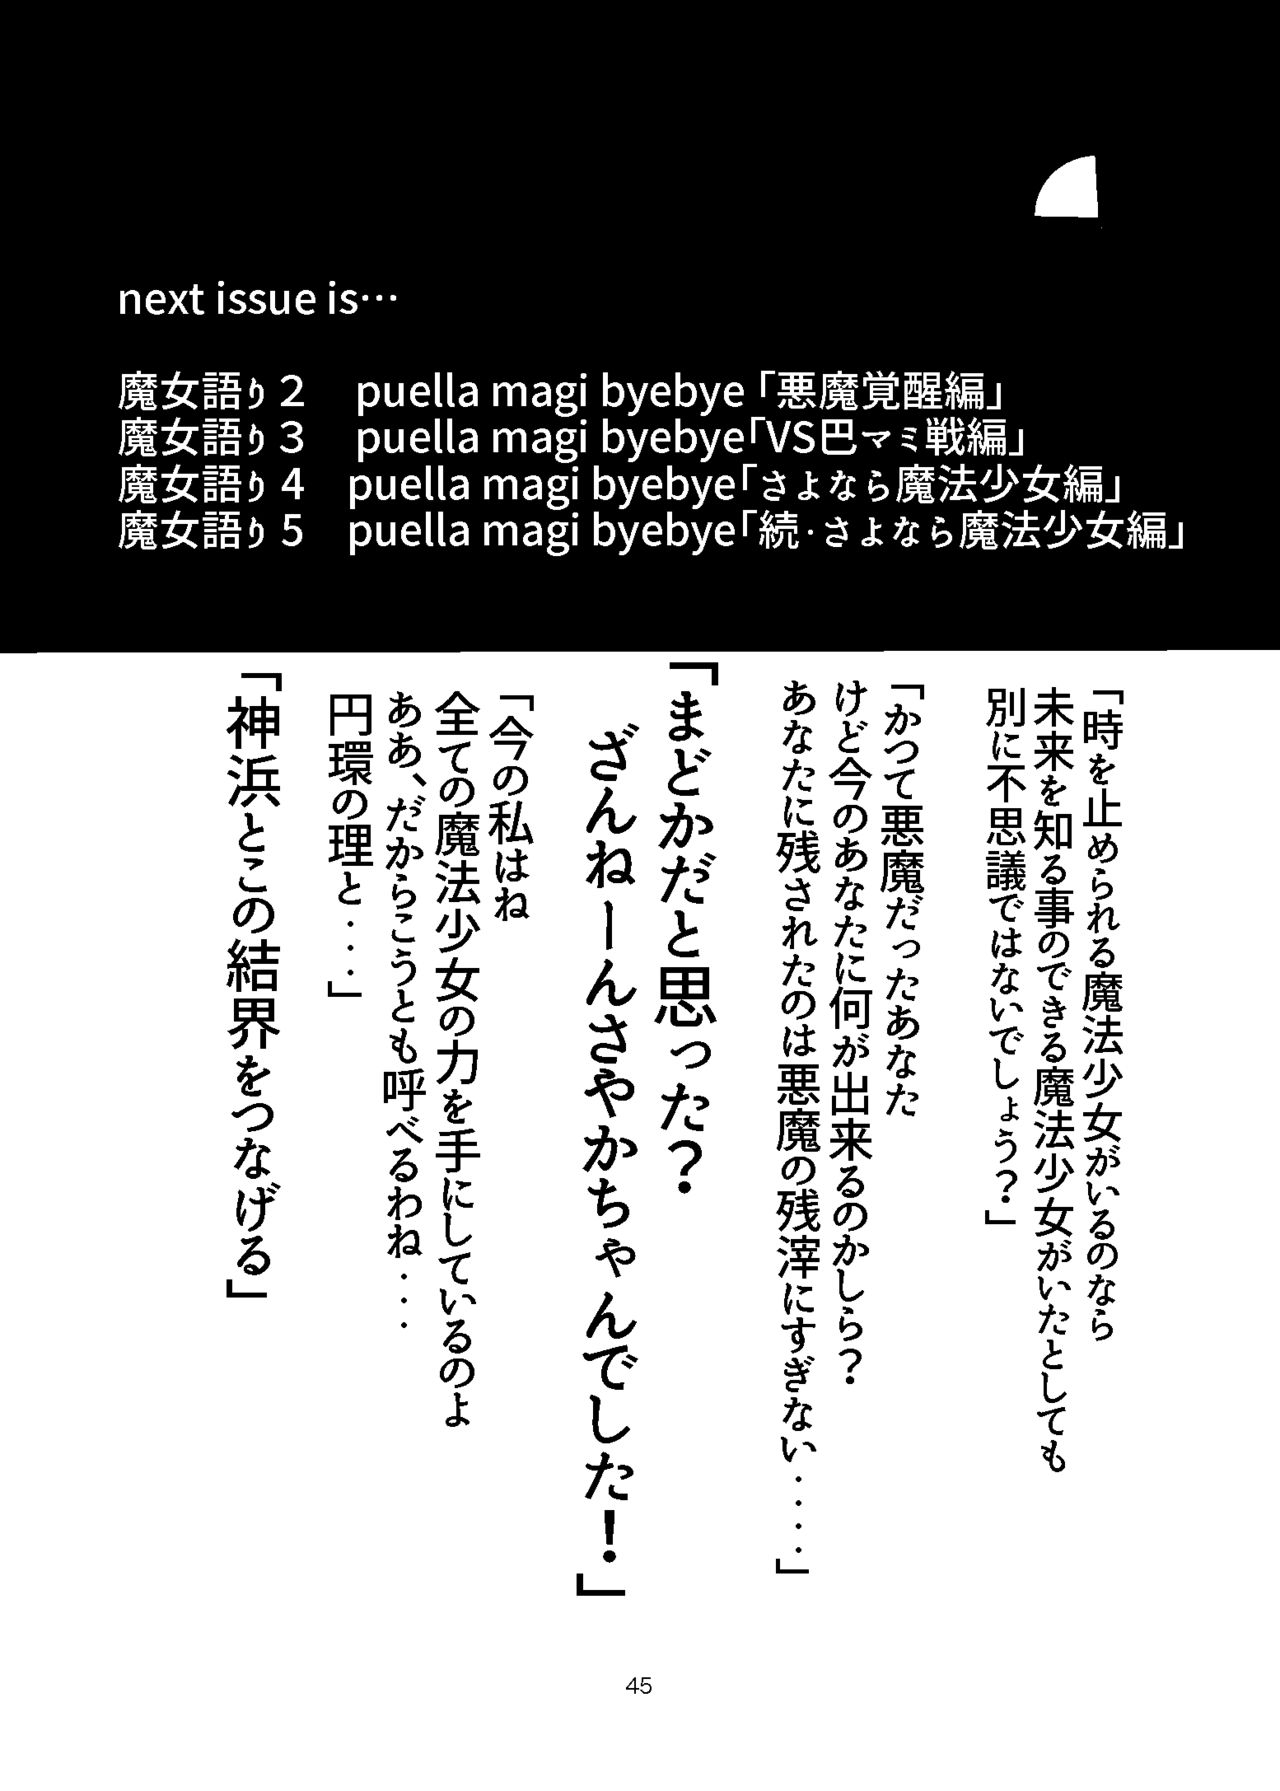 [Mori] Majo Katari 1 - puella magi byebye "Majo Saisei Hen" (Puella Magi Madoka Magica) [Digital] 43